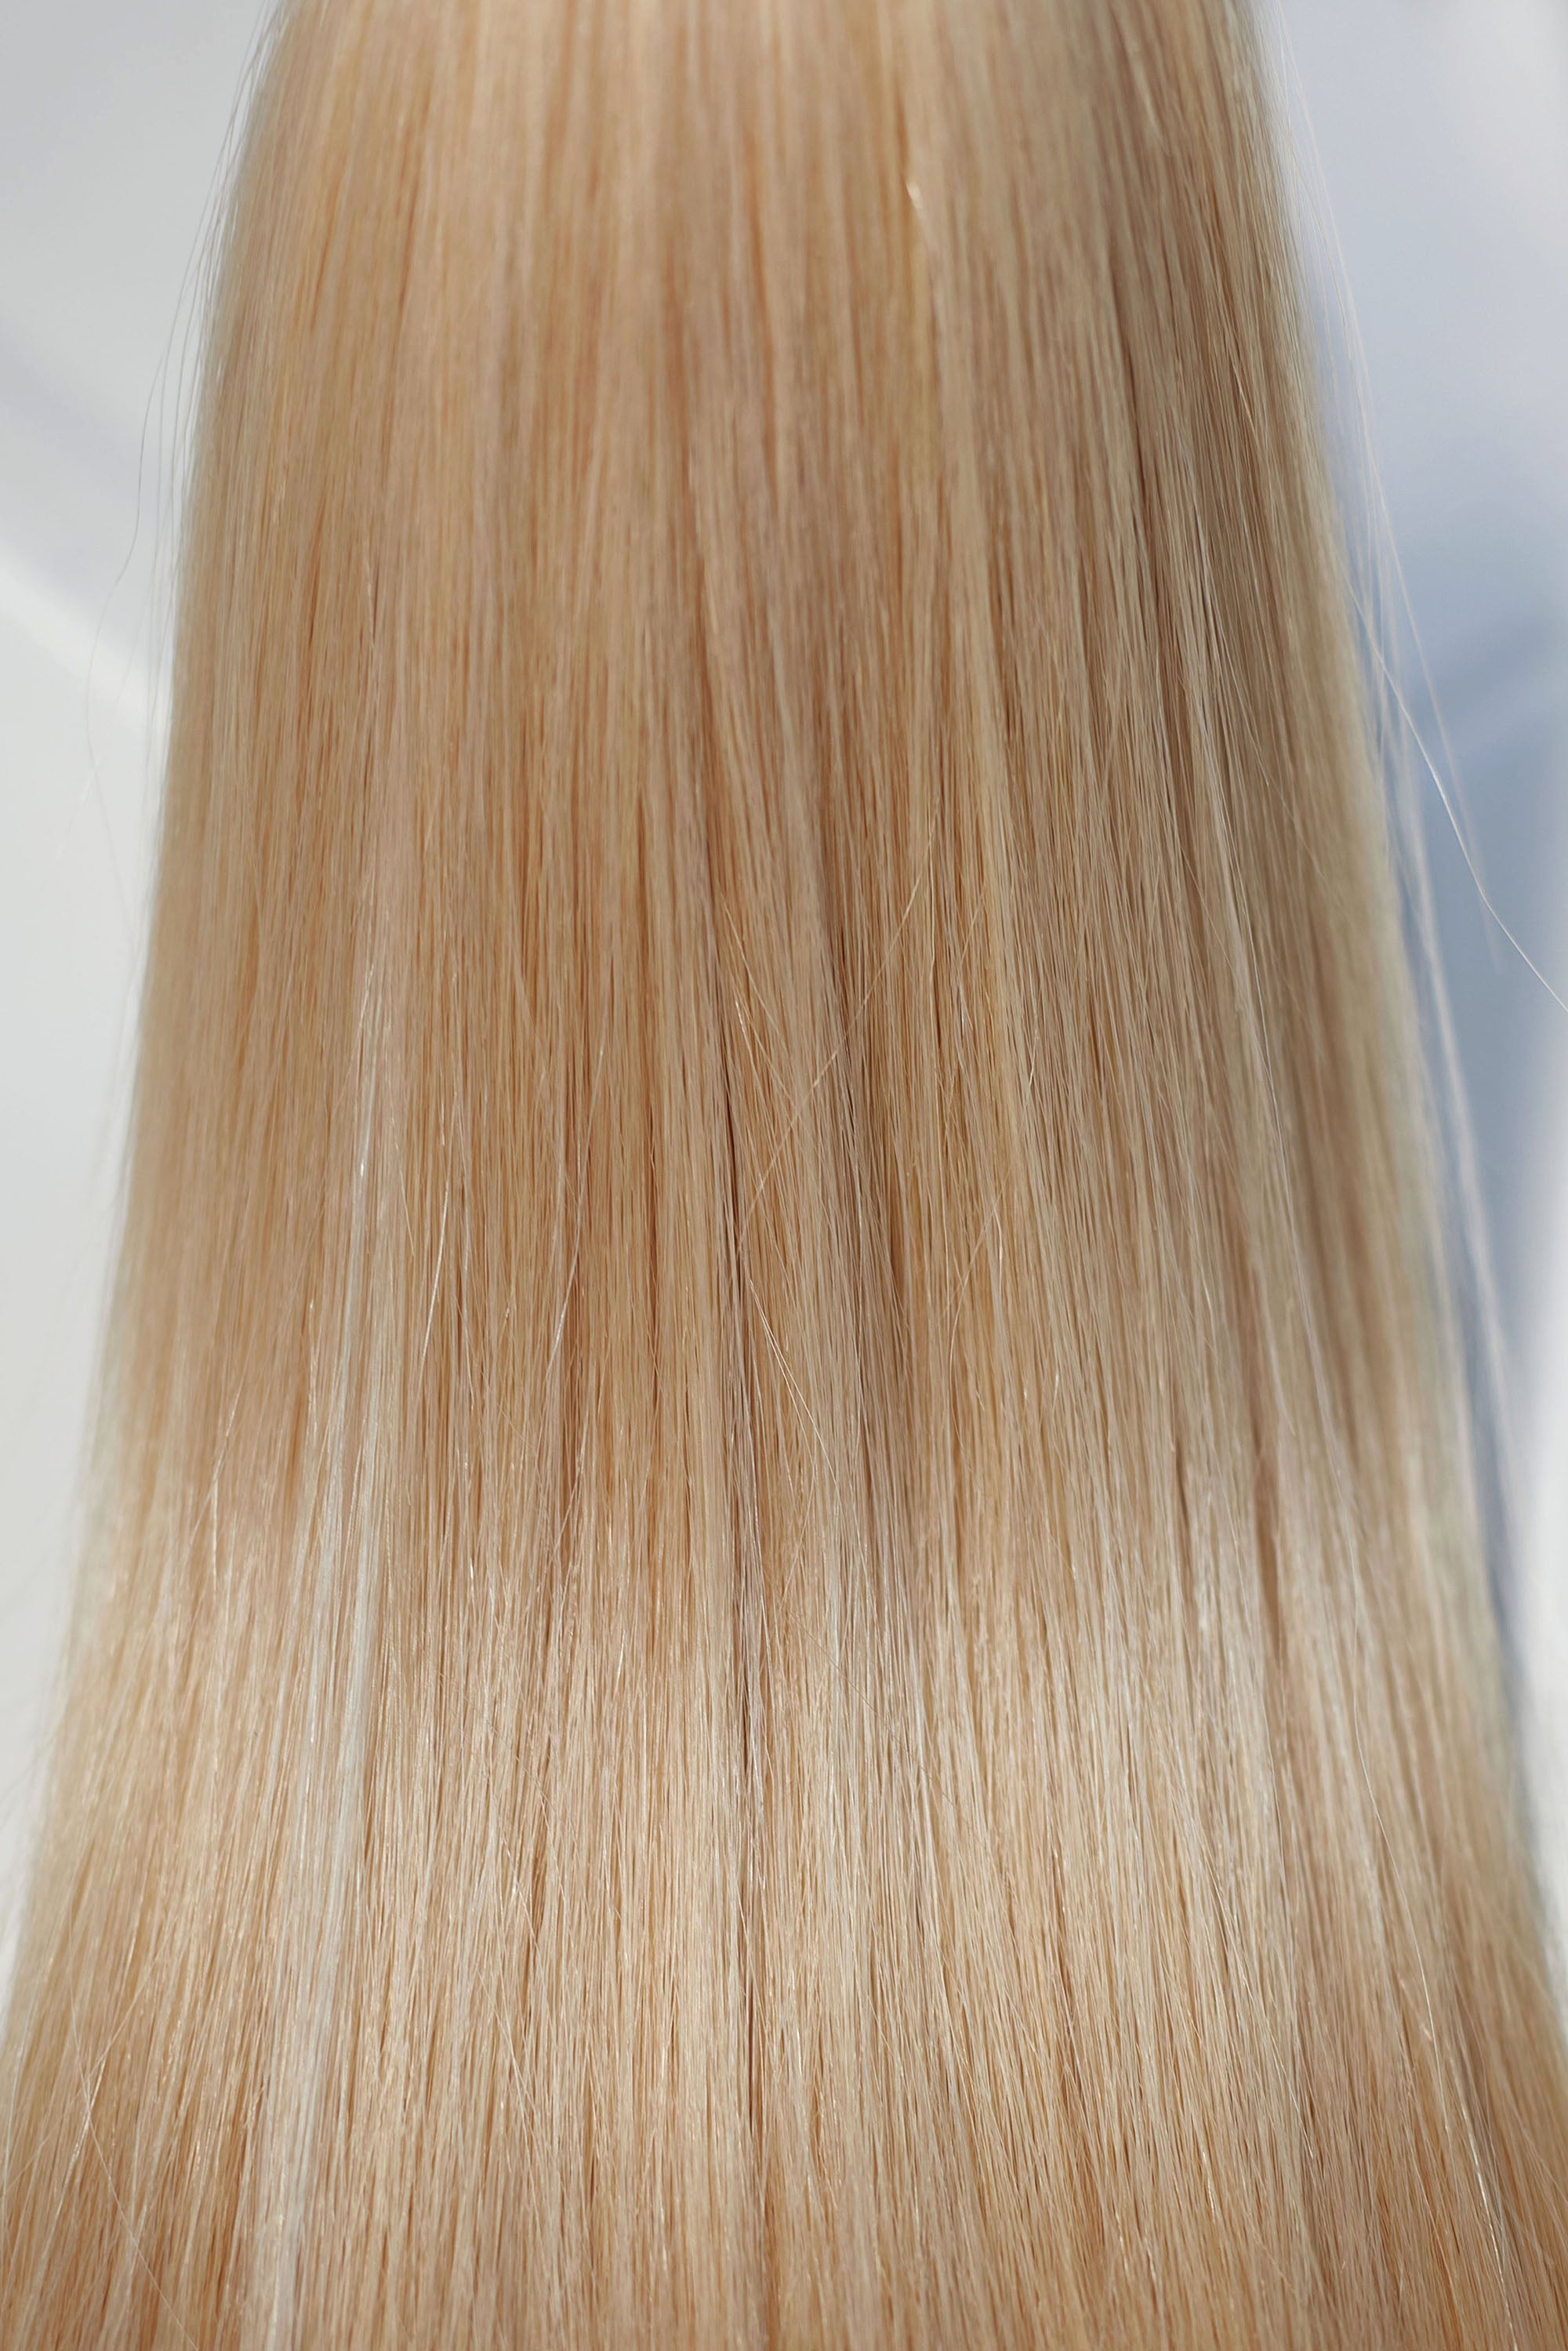 Behair professional Keratin Tip "Premium" 24" (60cm) Natural Straight Light Gold Blond #24 - 25g (Micro - 0.5g each pcs) hair extensions